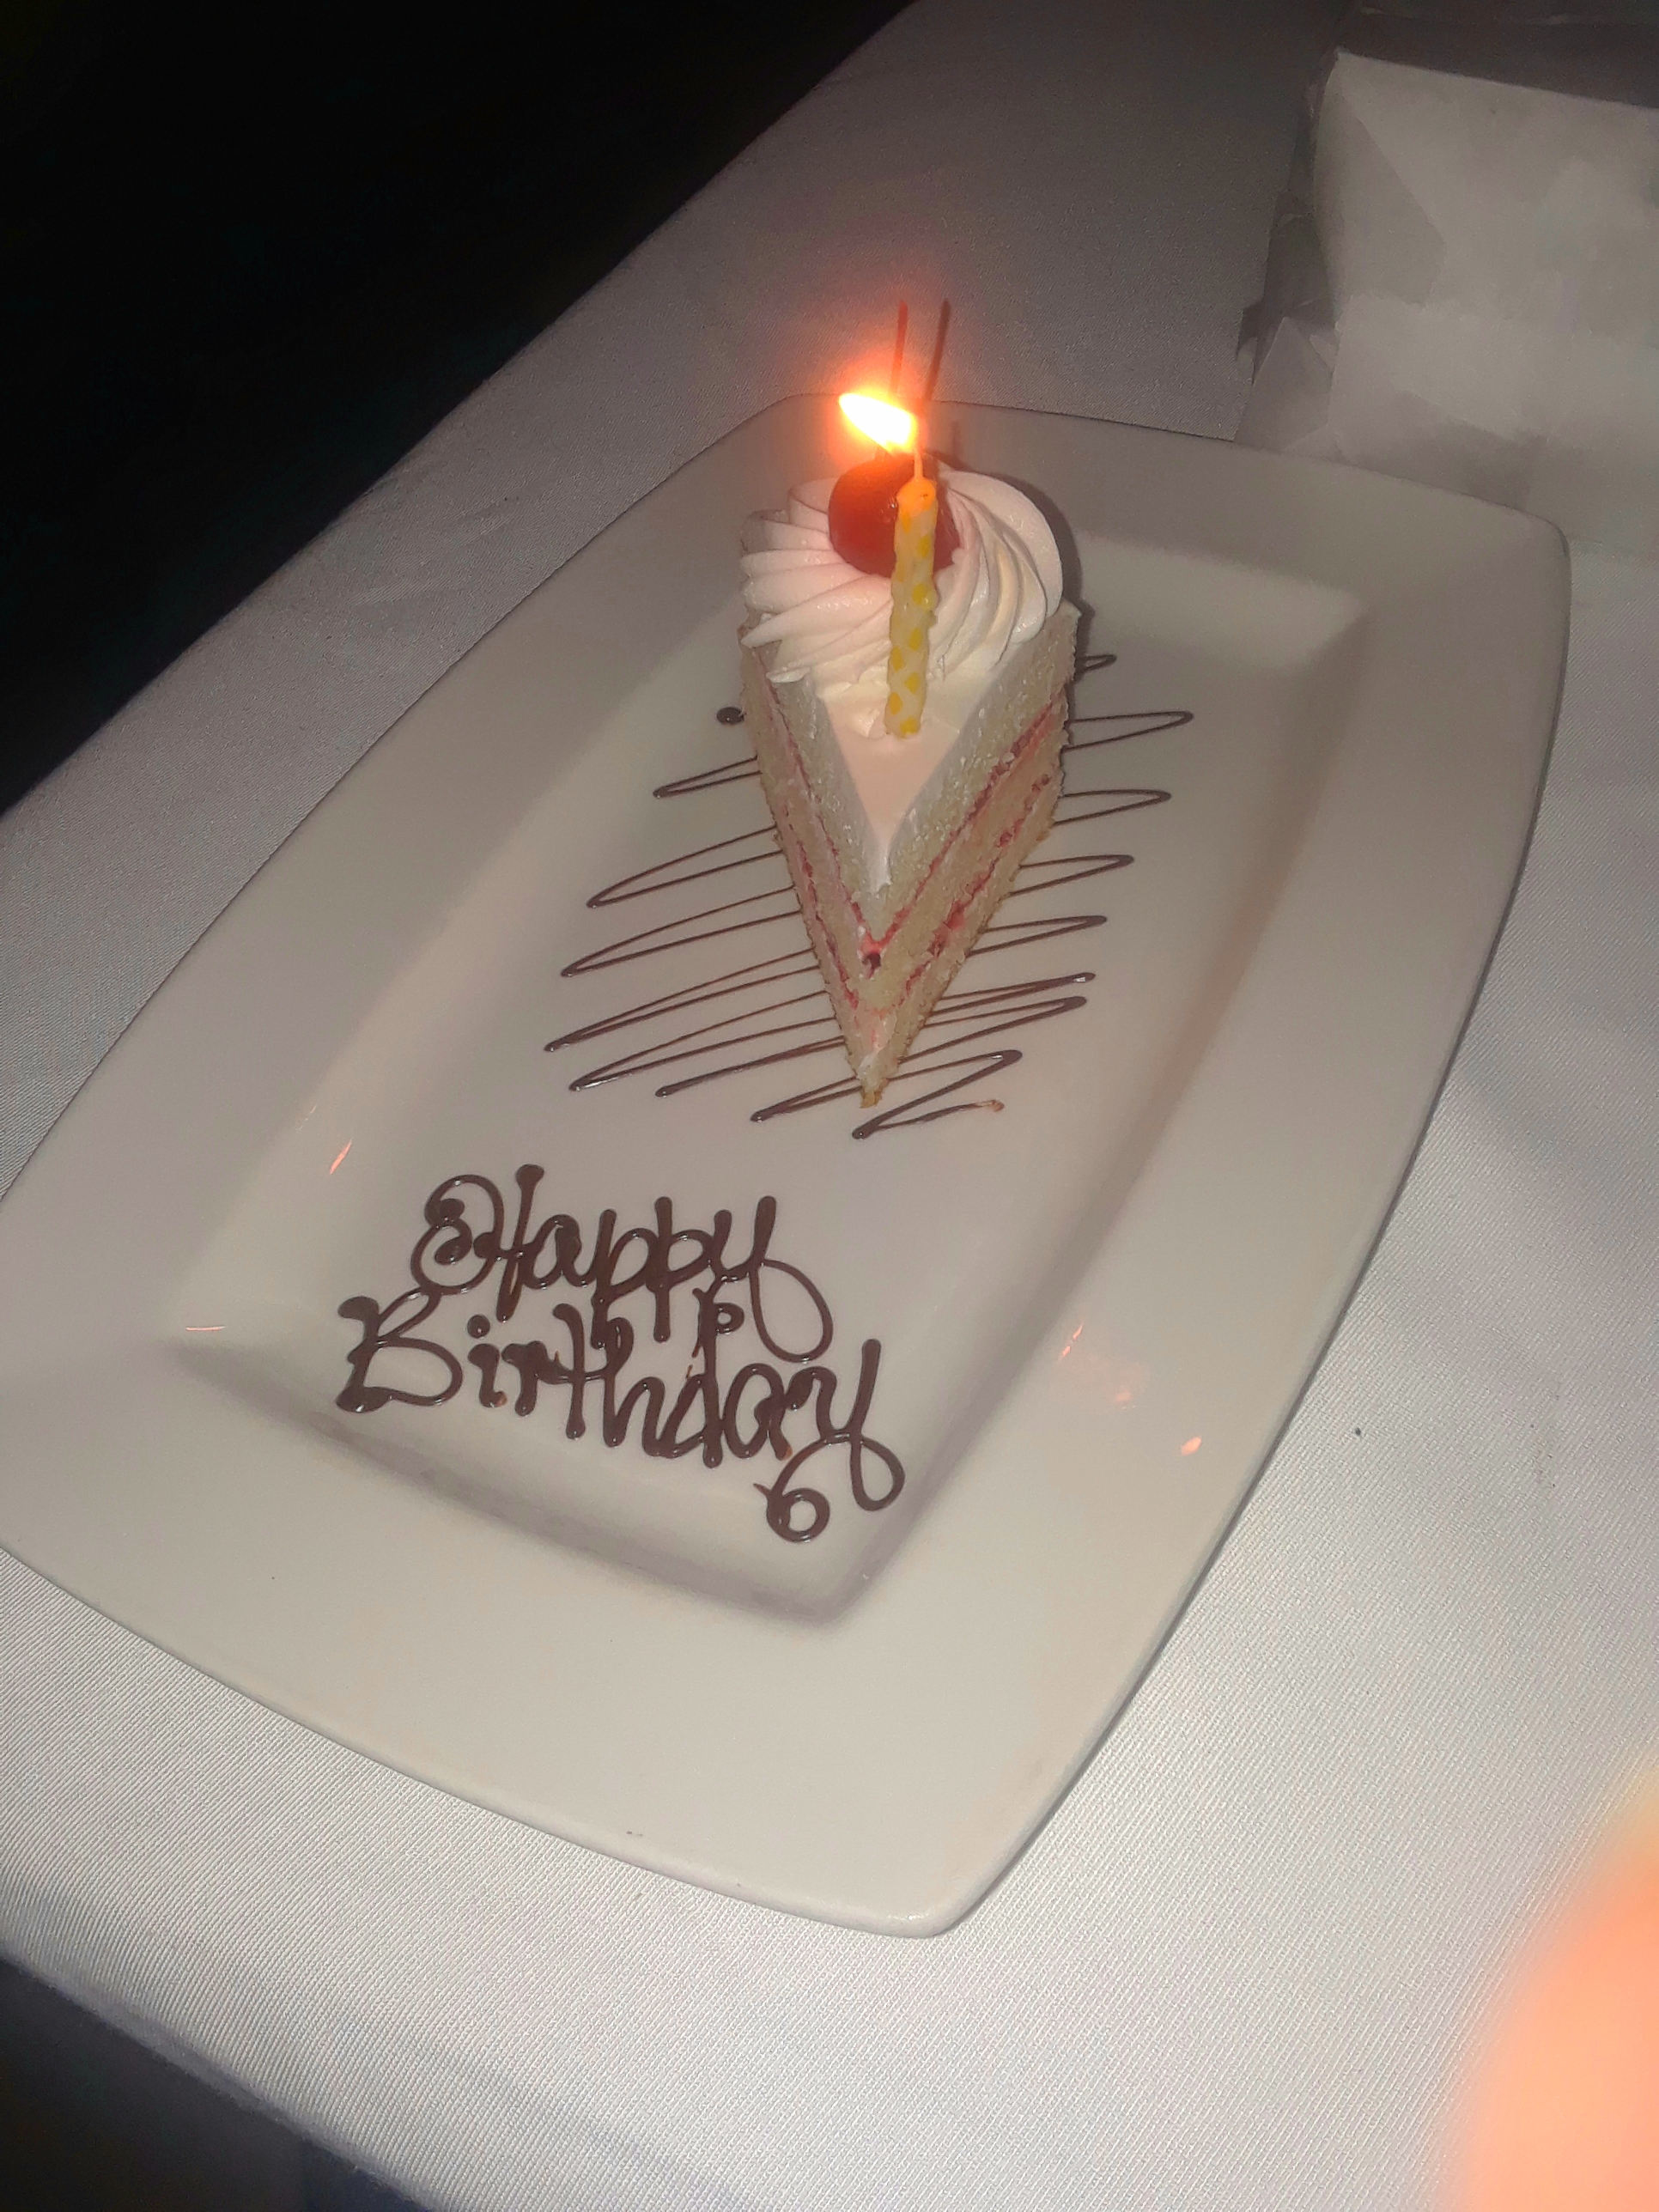 Make a wish! Birthday cakeslice with cake